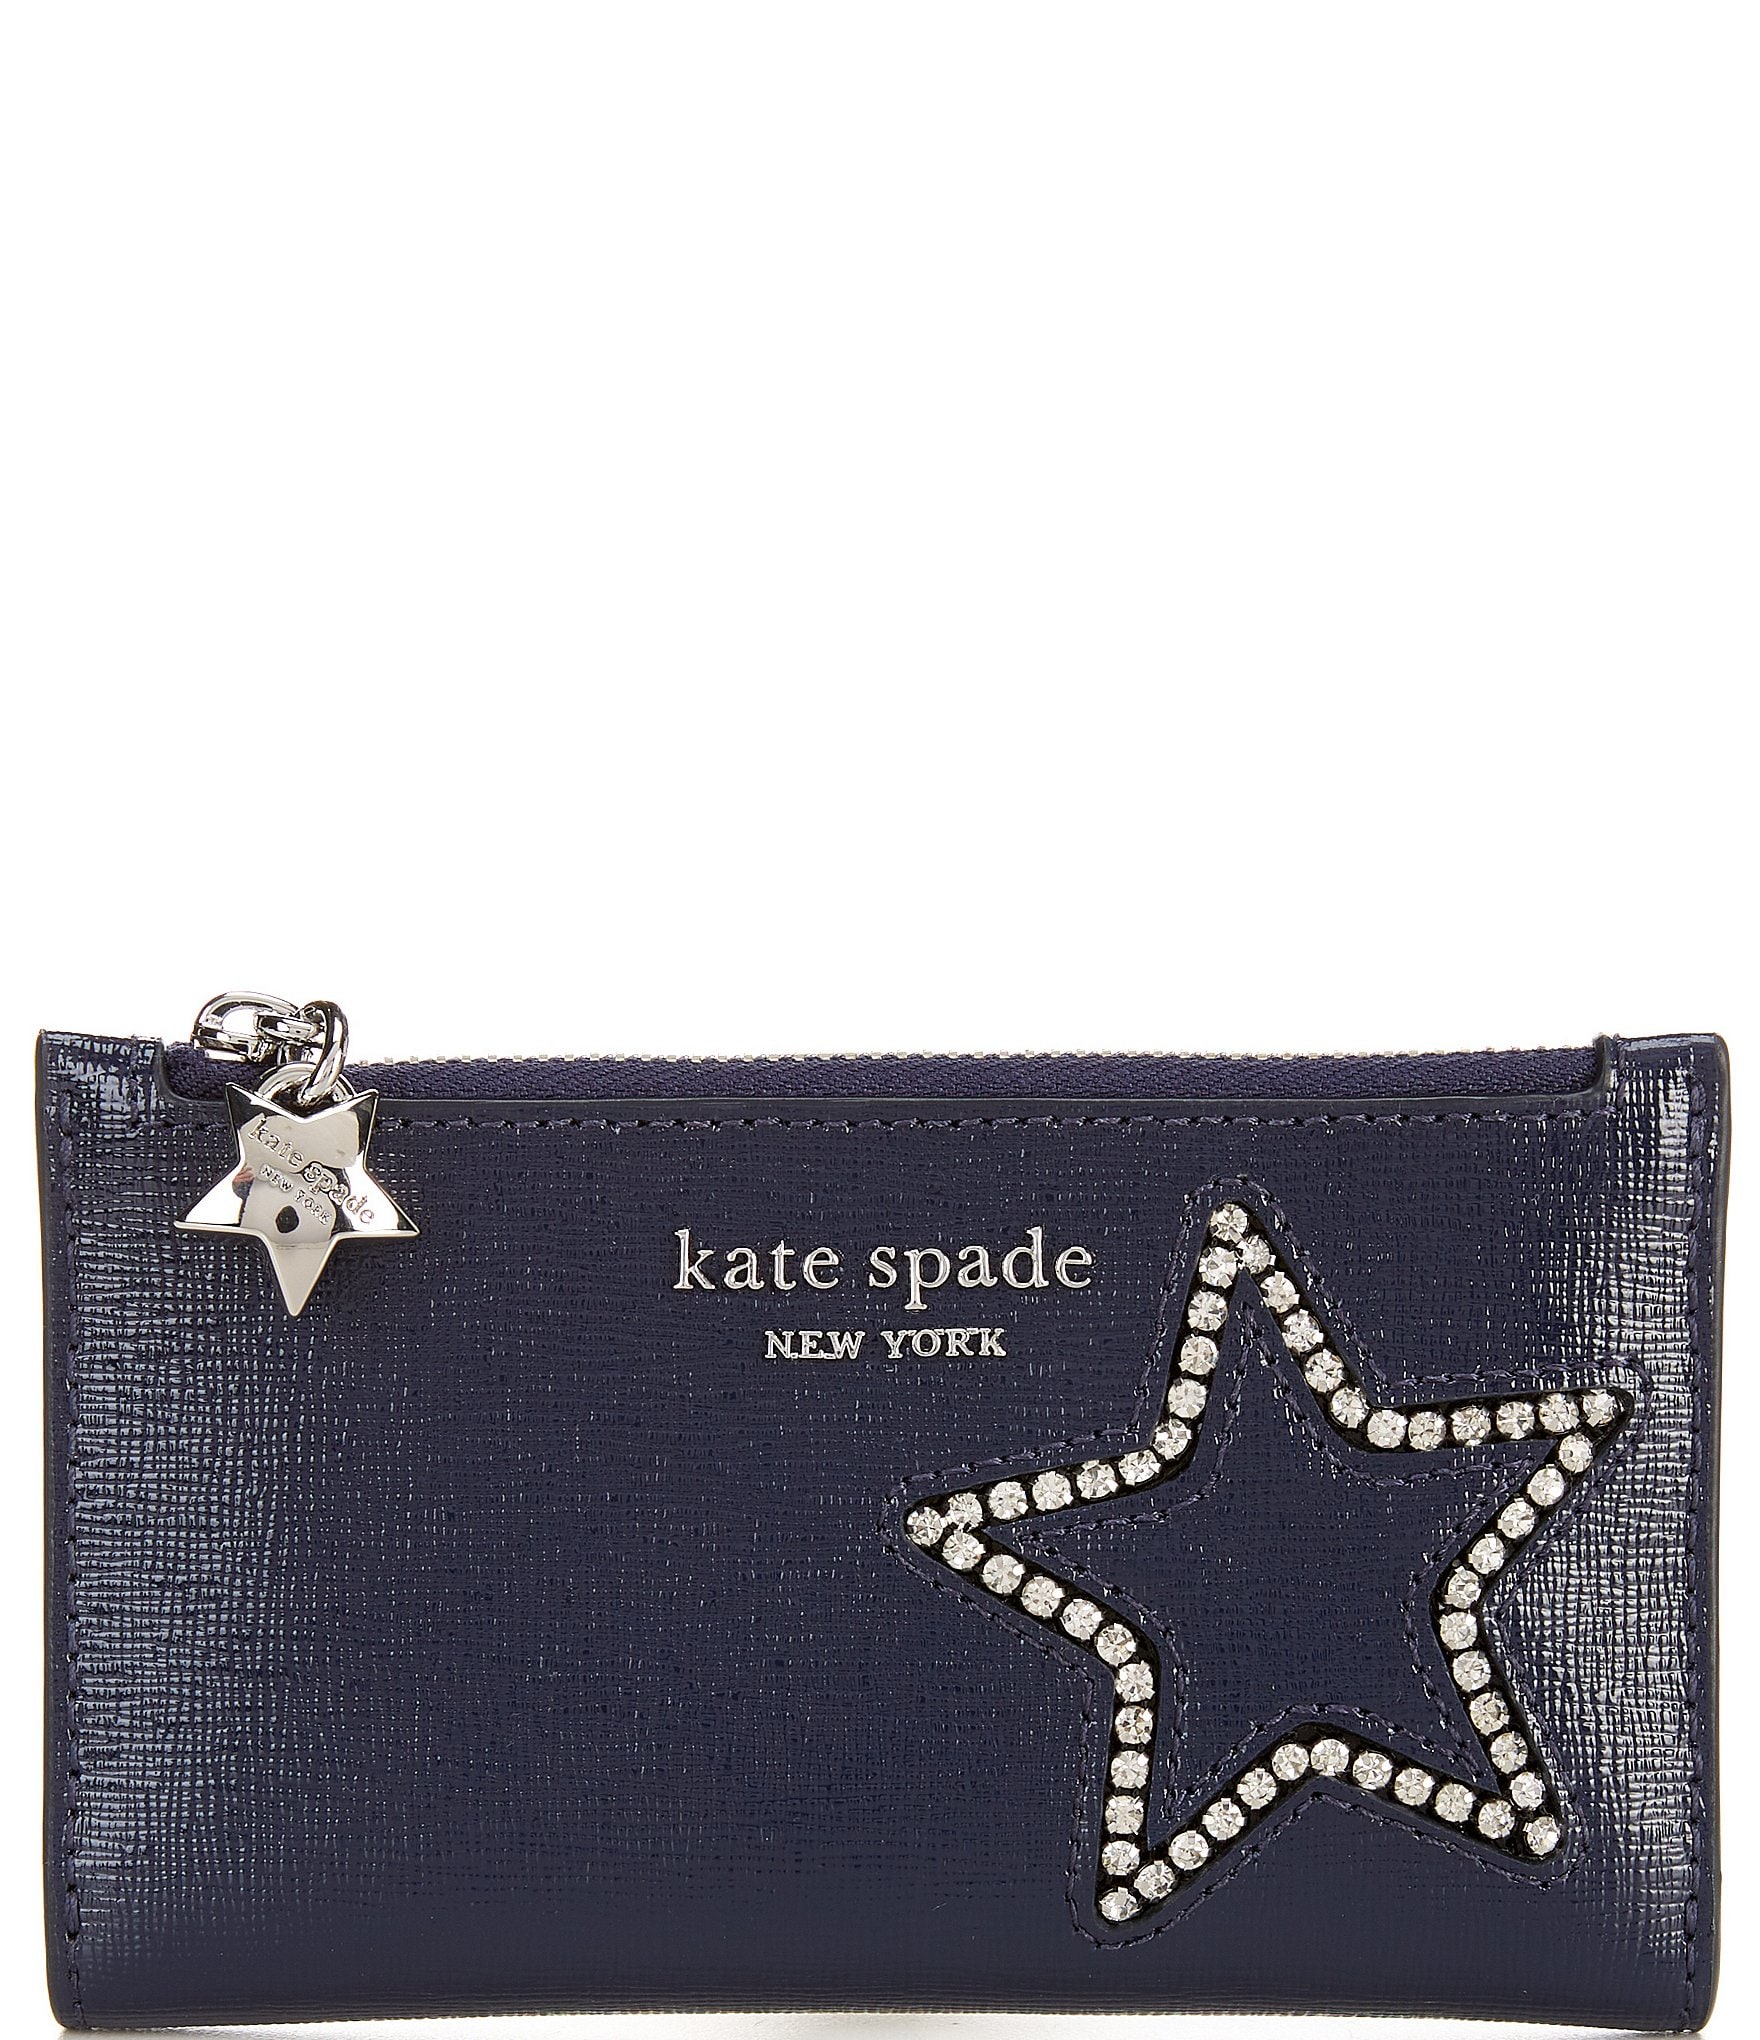 NWT Kate Spade Star Bright Owl Gray Leather Crossbody/clutch | eBay